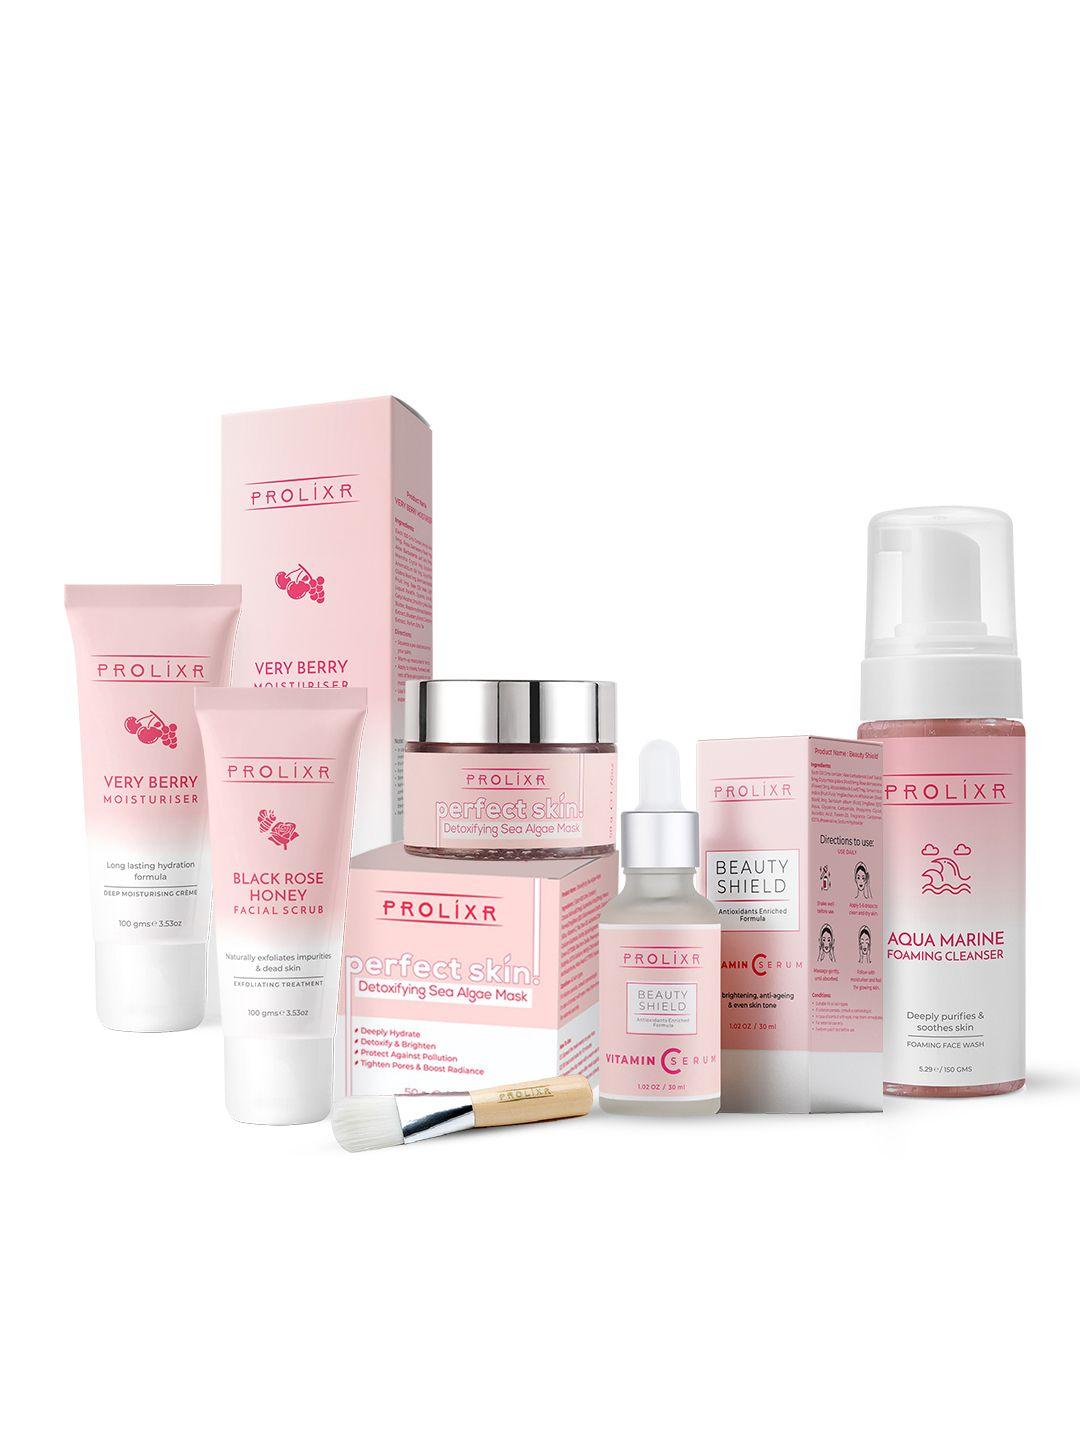 prolixr ultimate super skin bundle-pore tightening & detoxifying for all skin types 430ml